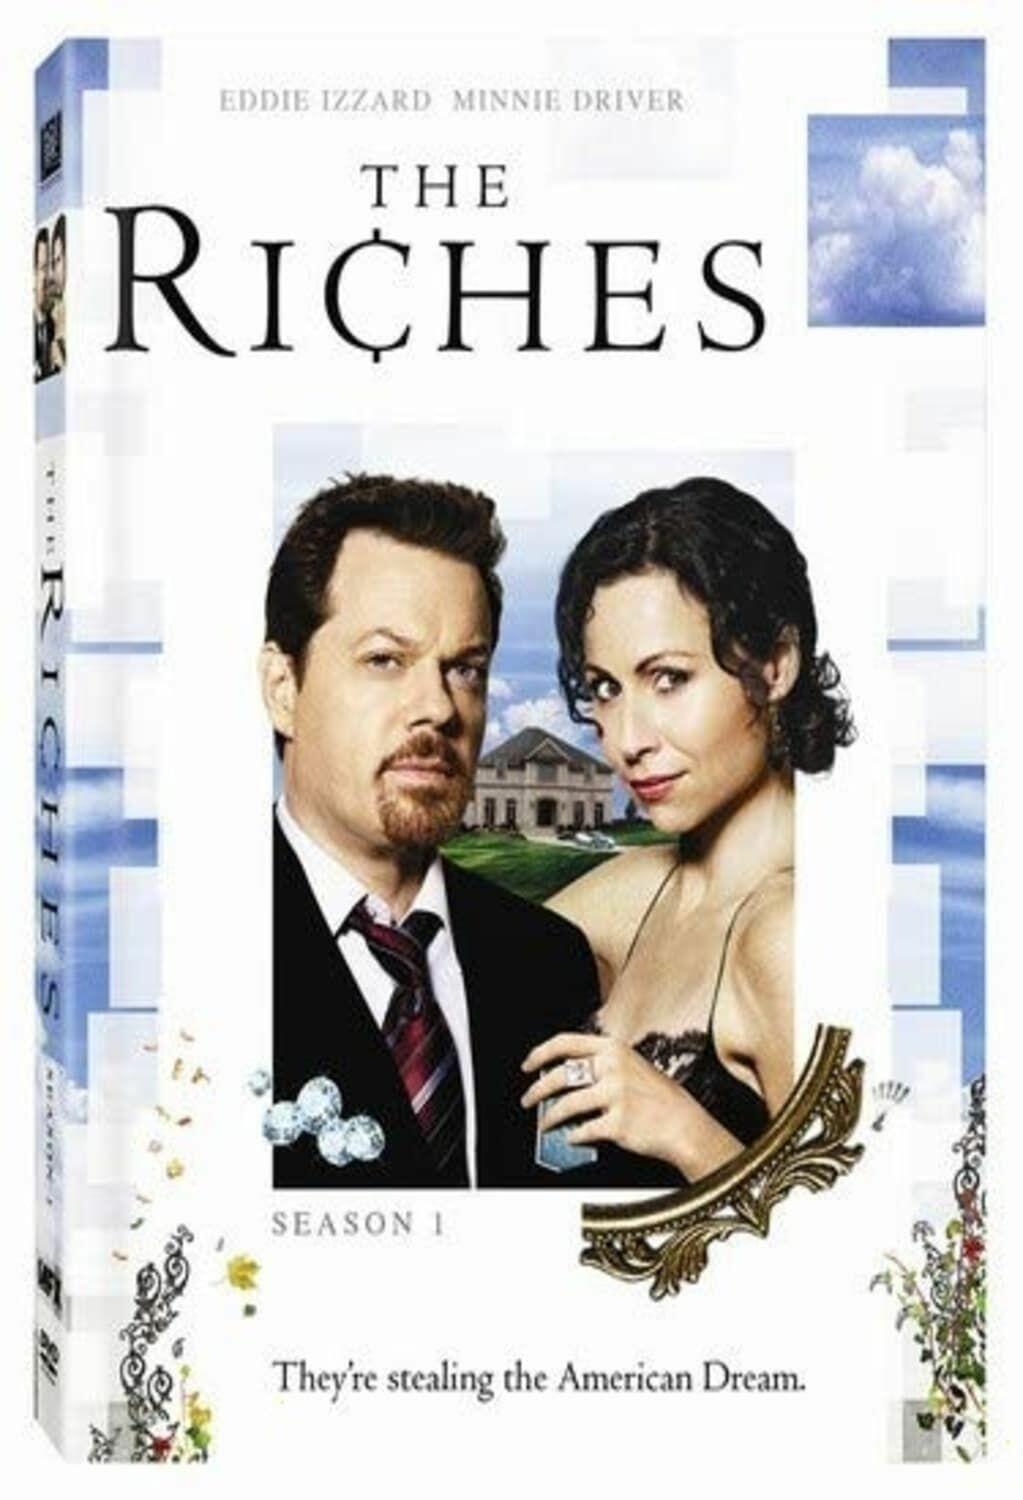 The Riches: Season 1 (DVD) on MovieShack